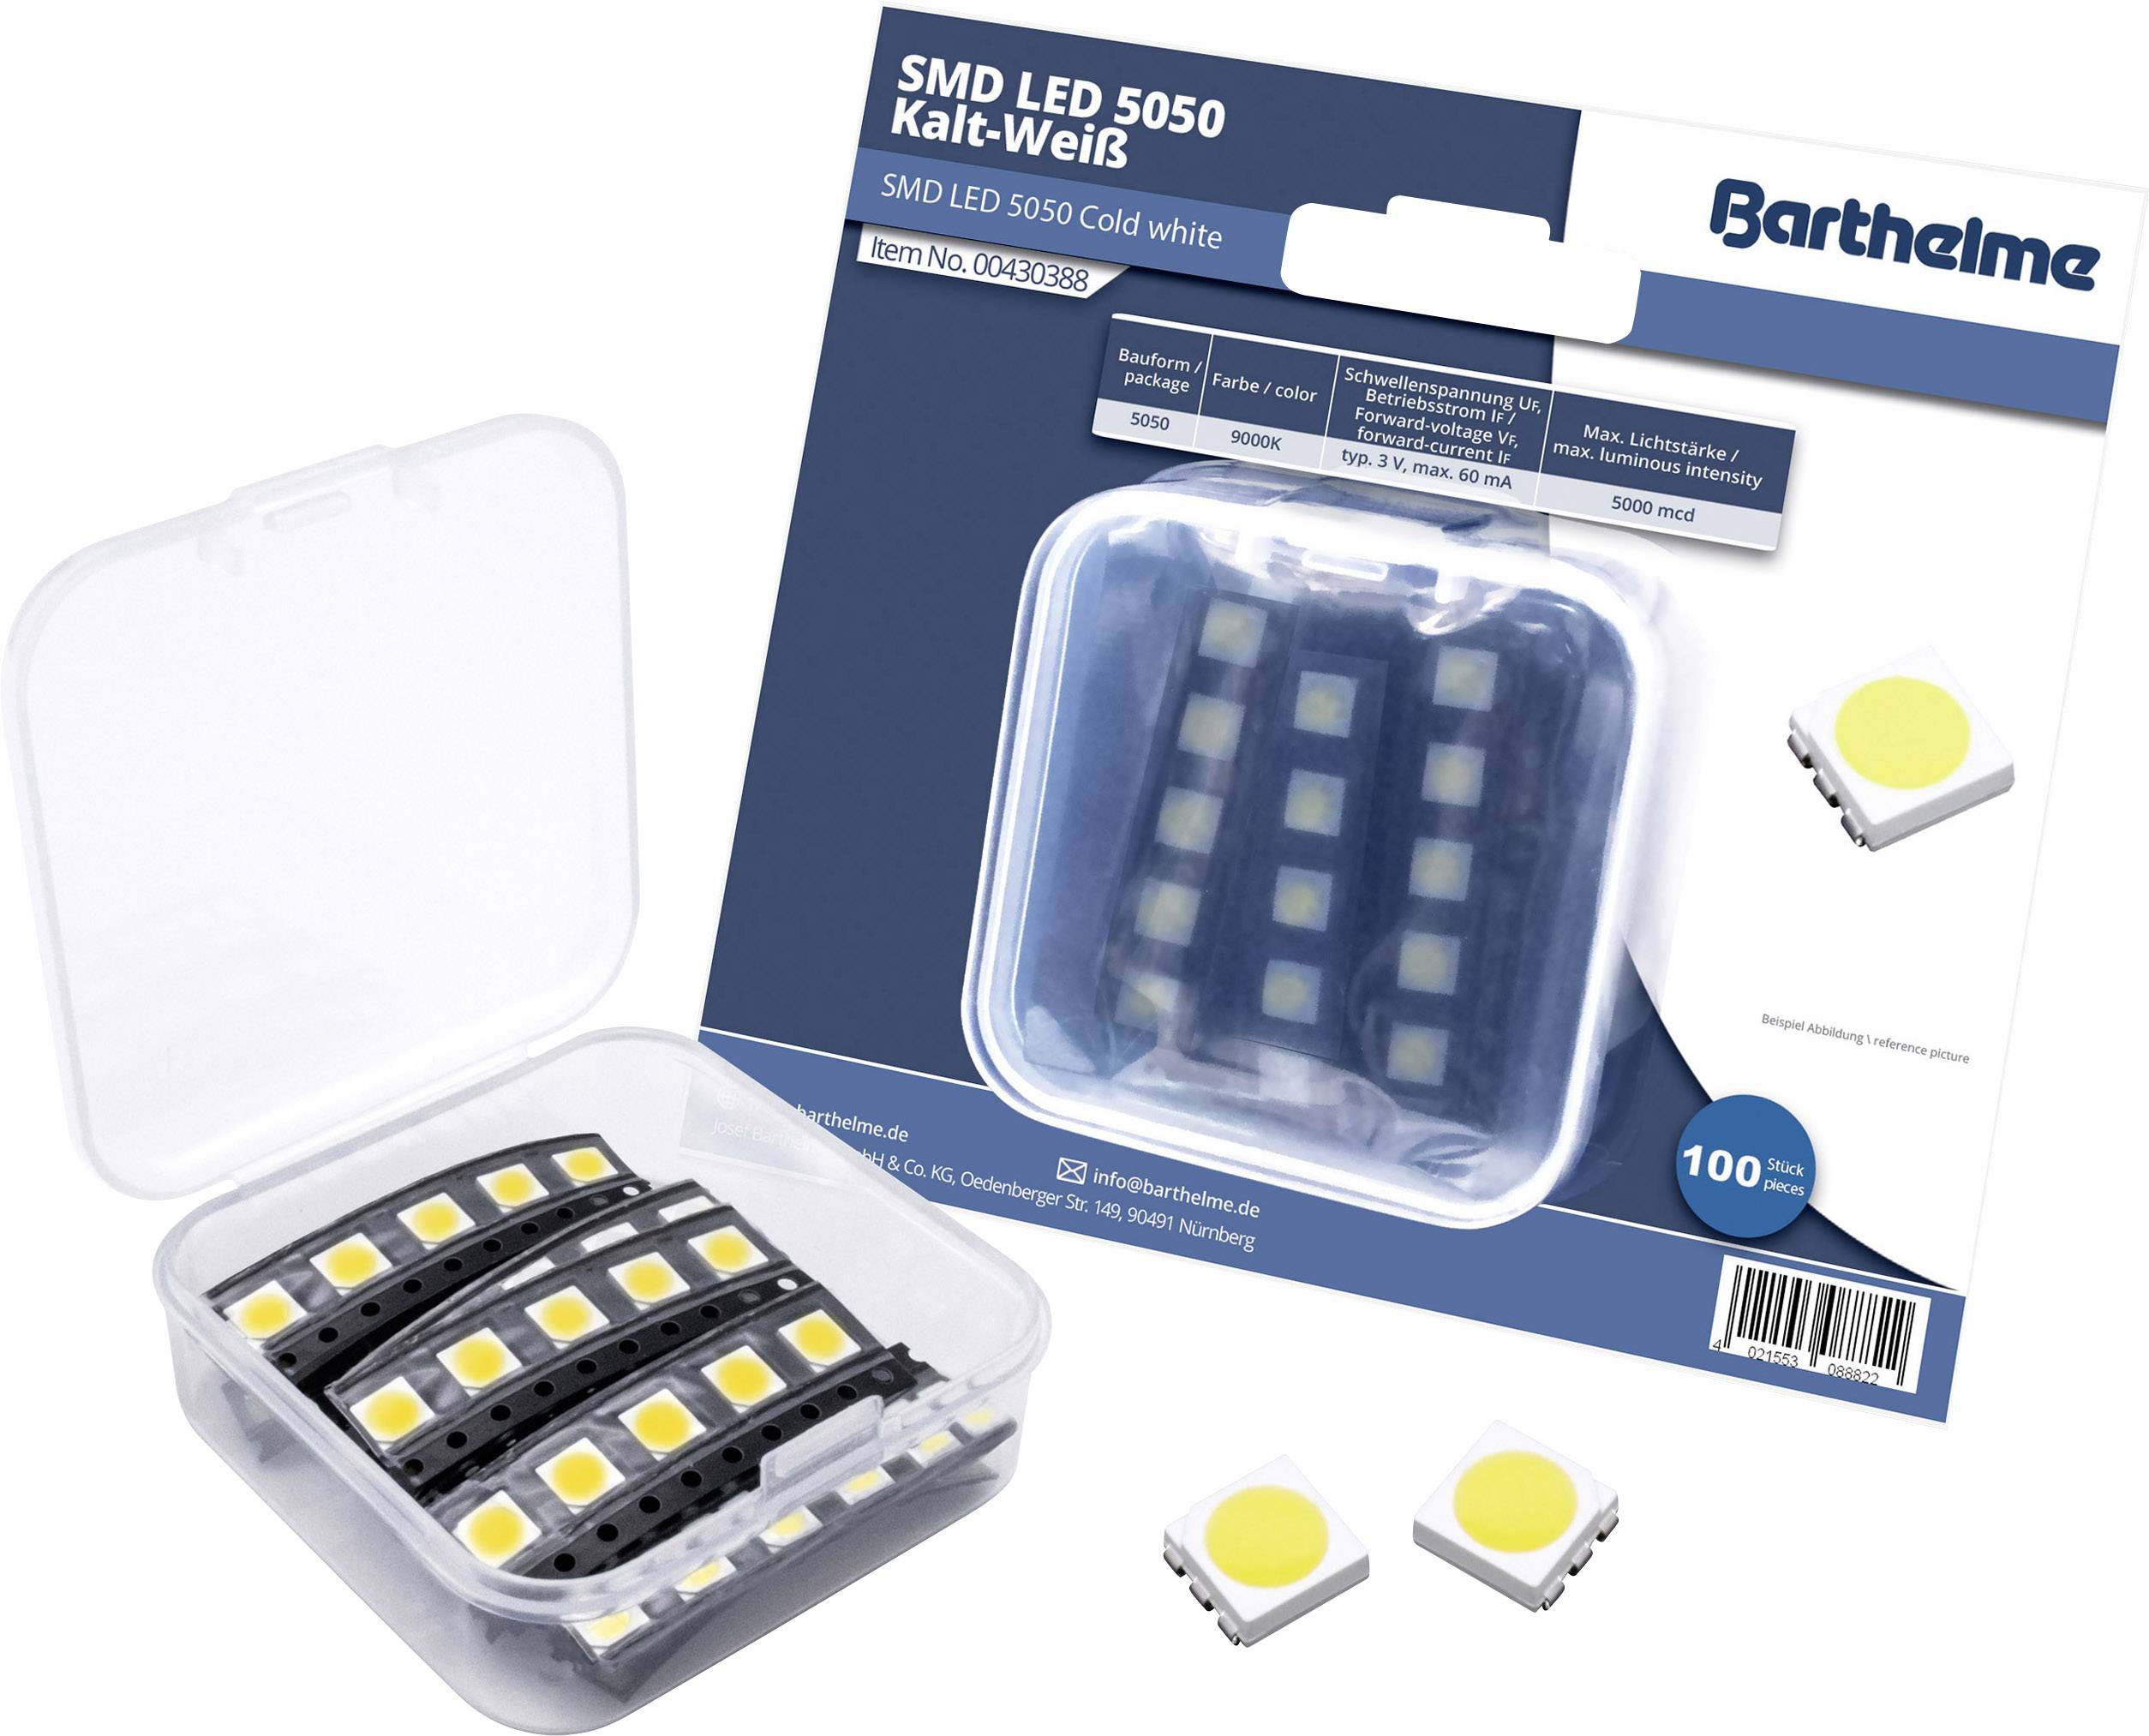 BARTHELME SMD-LED 5050 Kalt-Weiß 7000 mcd 120 ° 60 mA 3 V Bulk